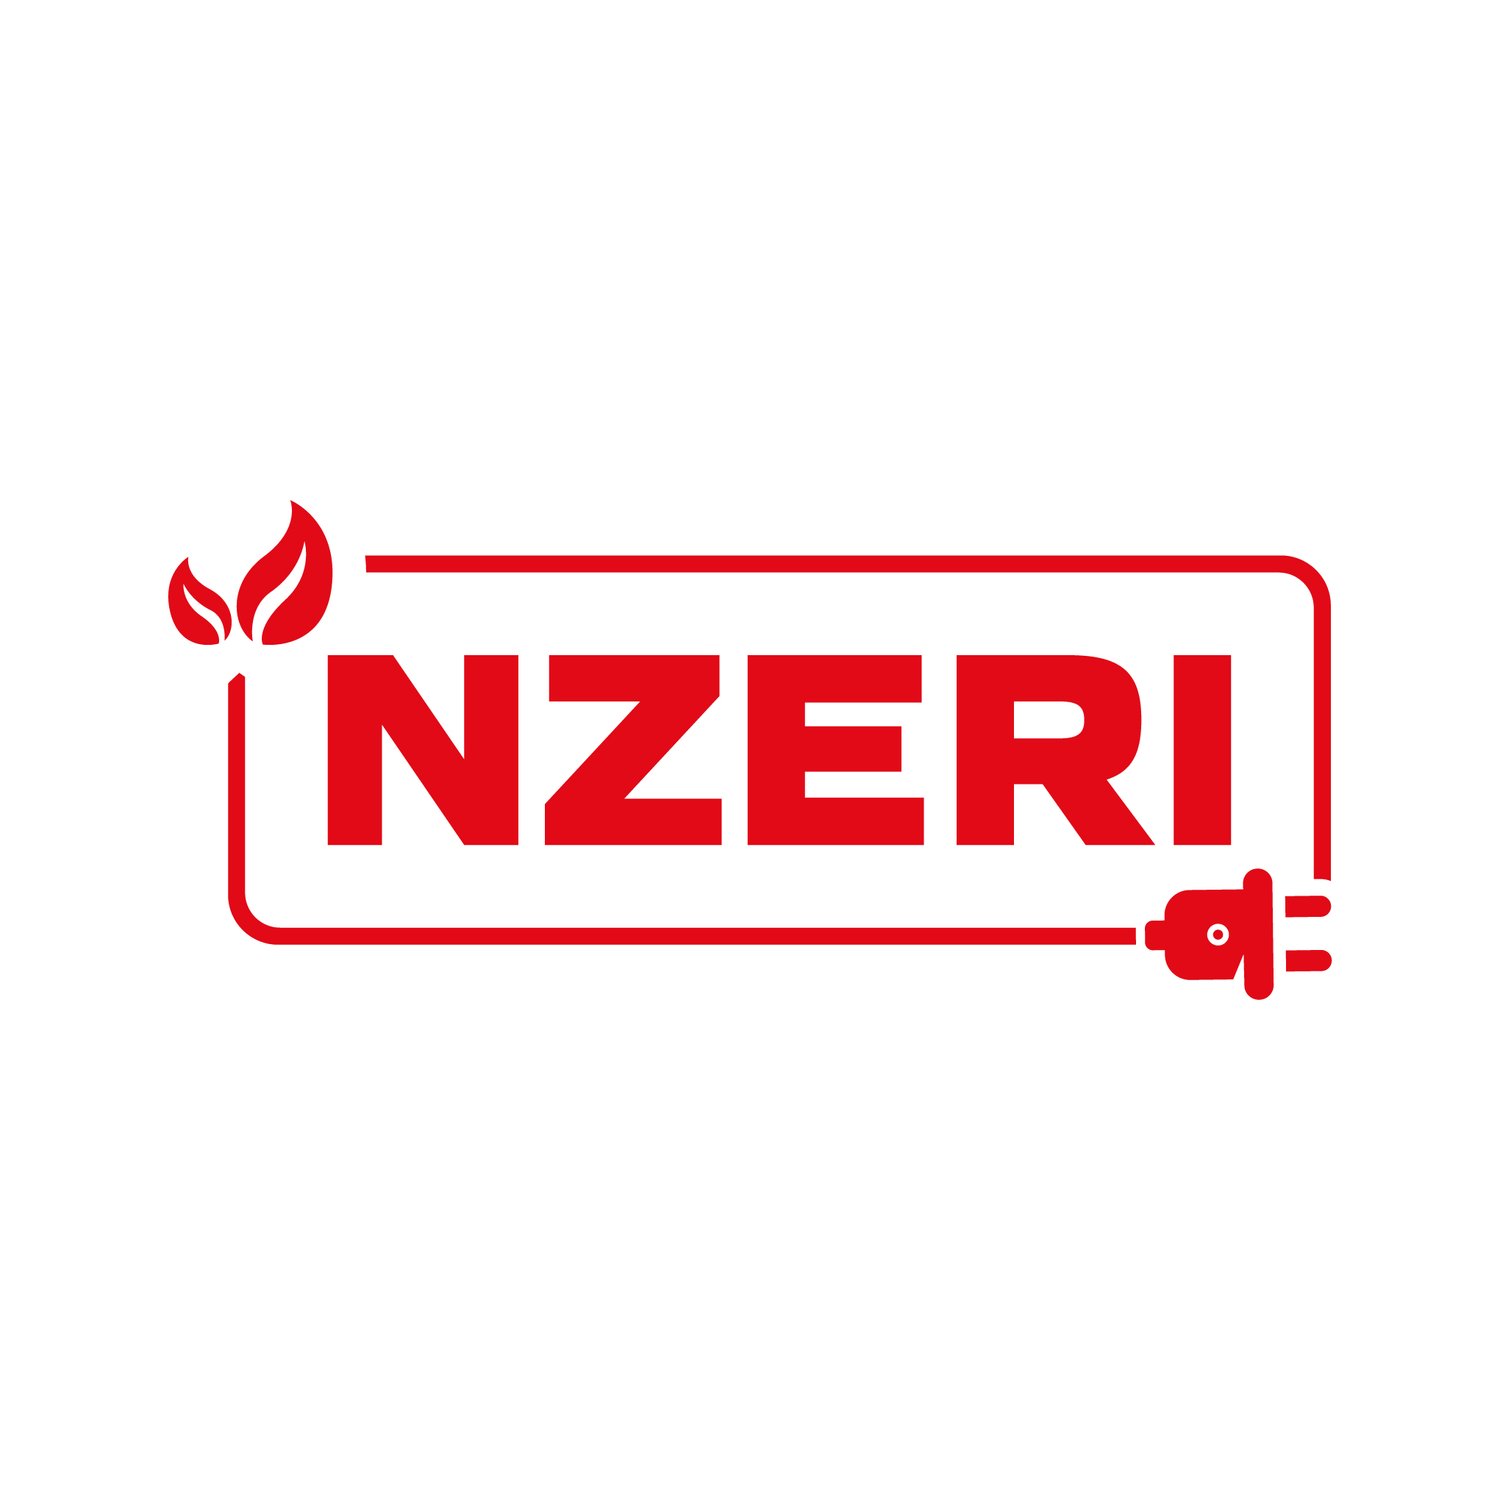 Net Zero Electricity Research Initiative